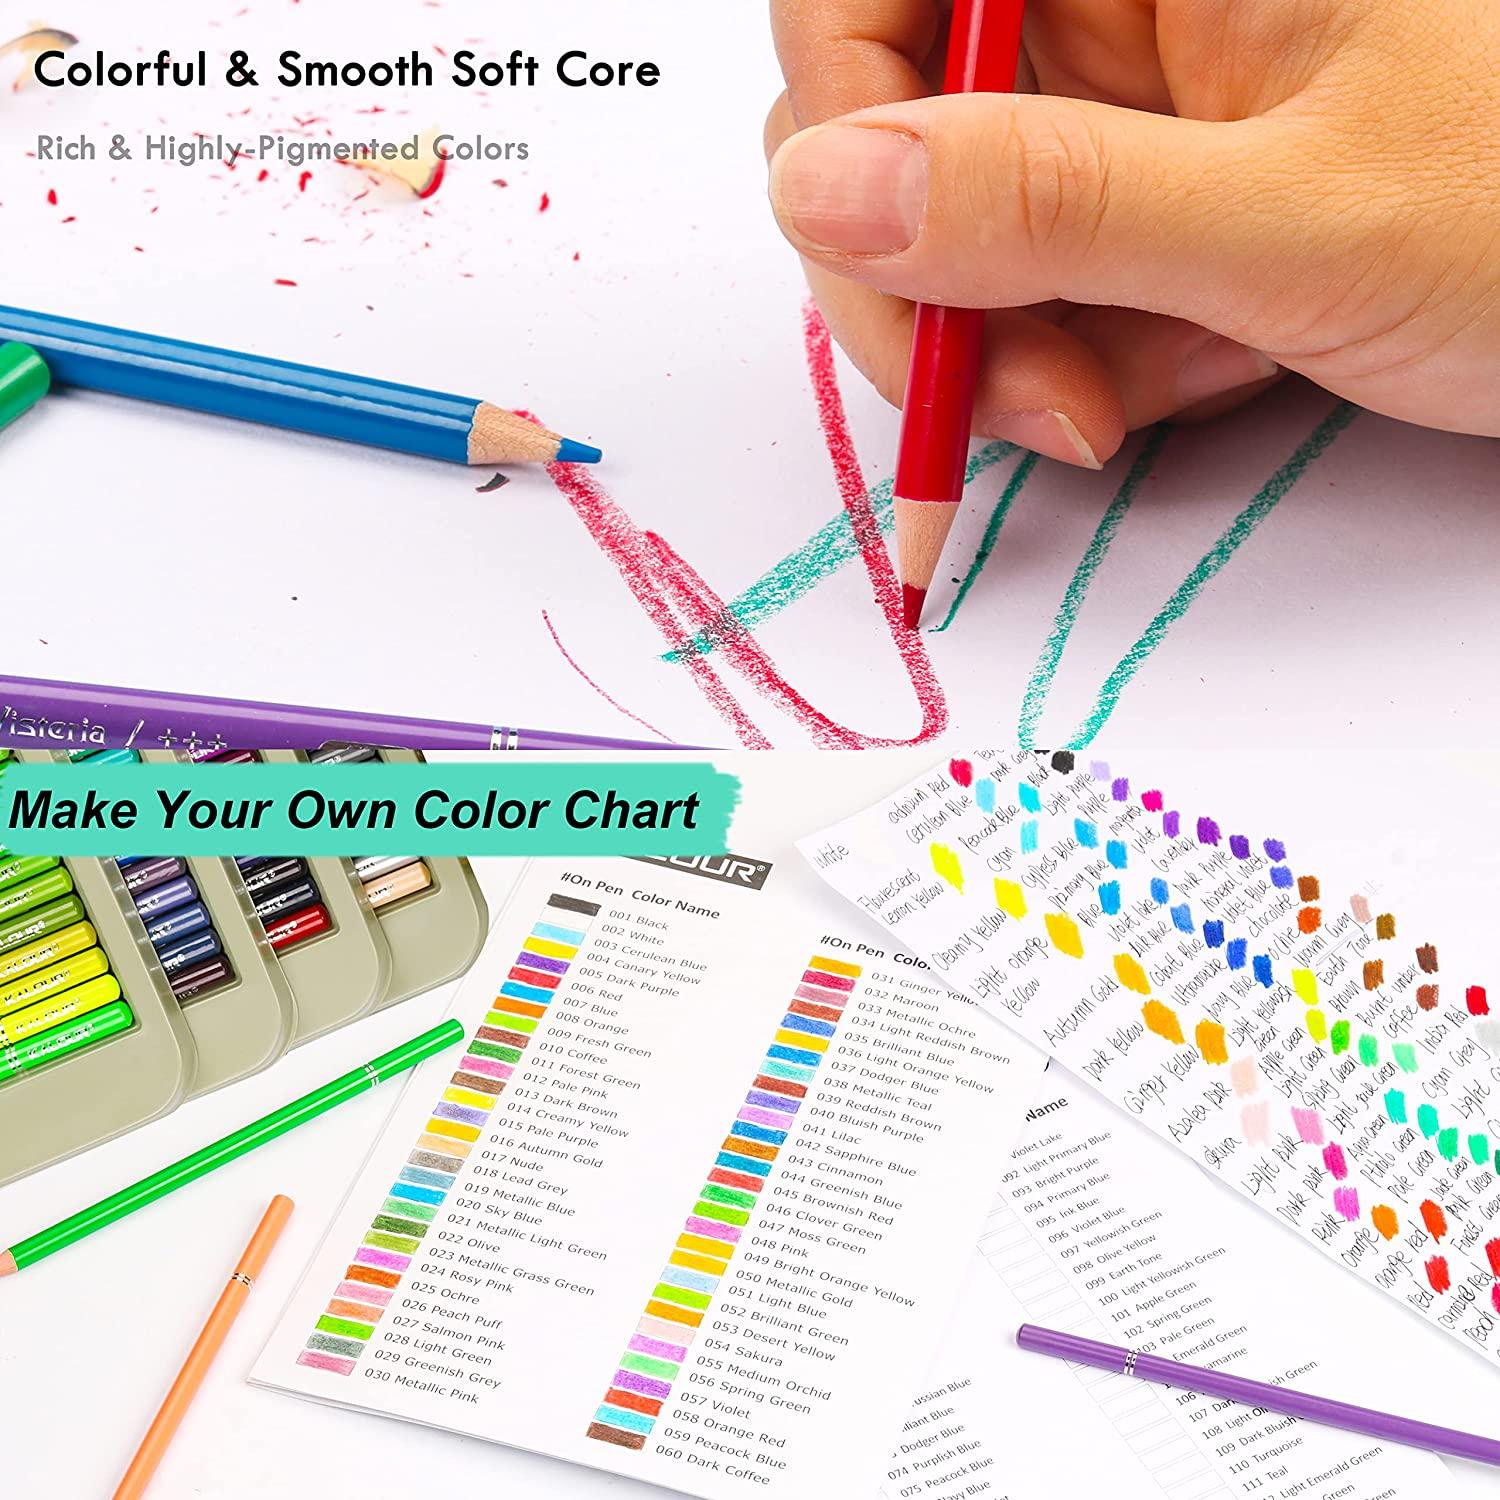 KALOUR Professional Colored Pencils,Set of 300 Colors,Artists Soft